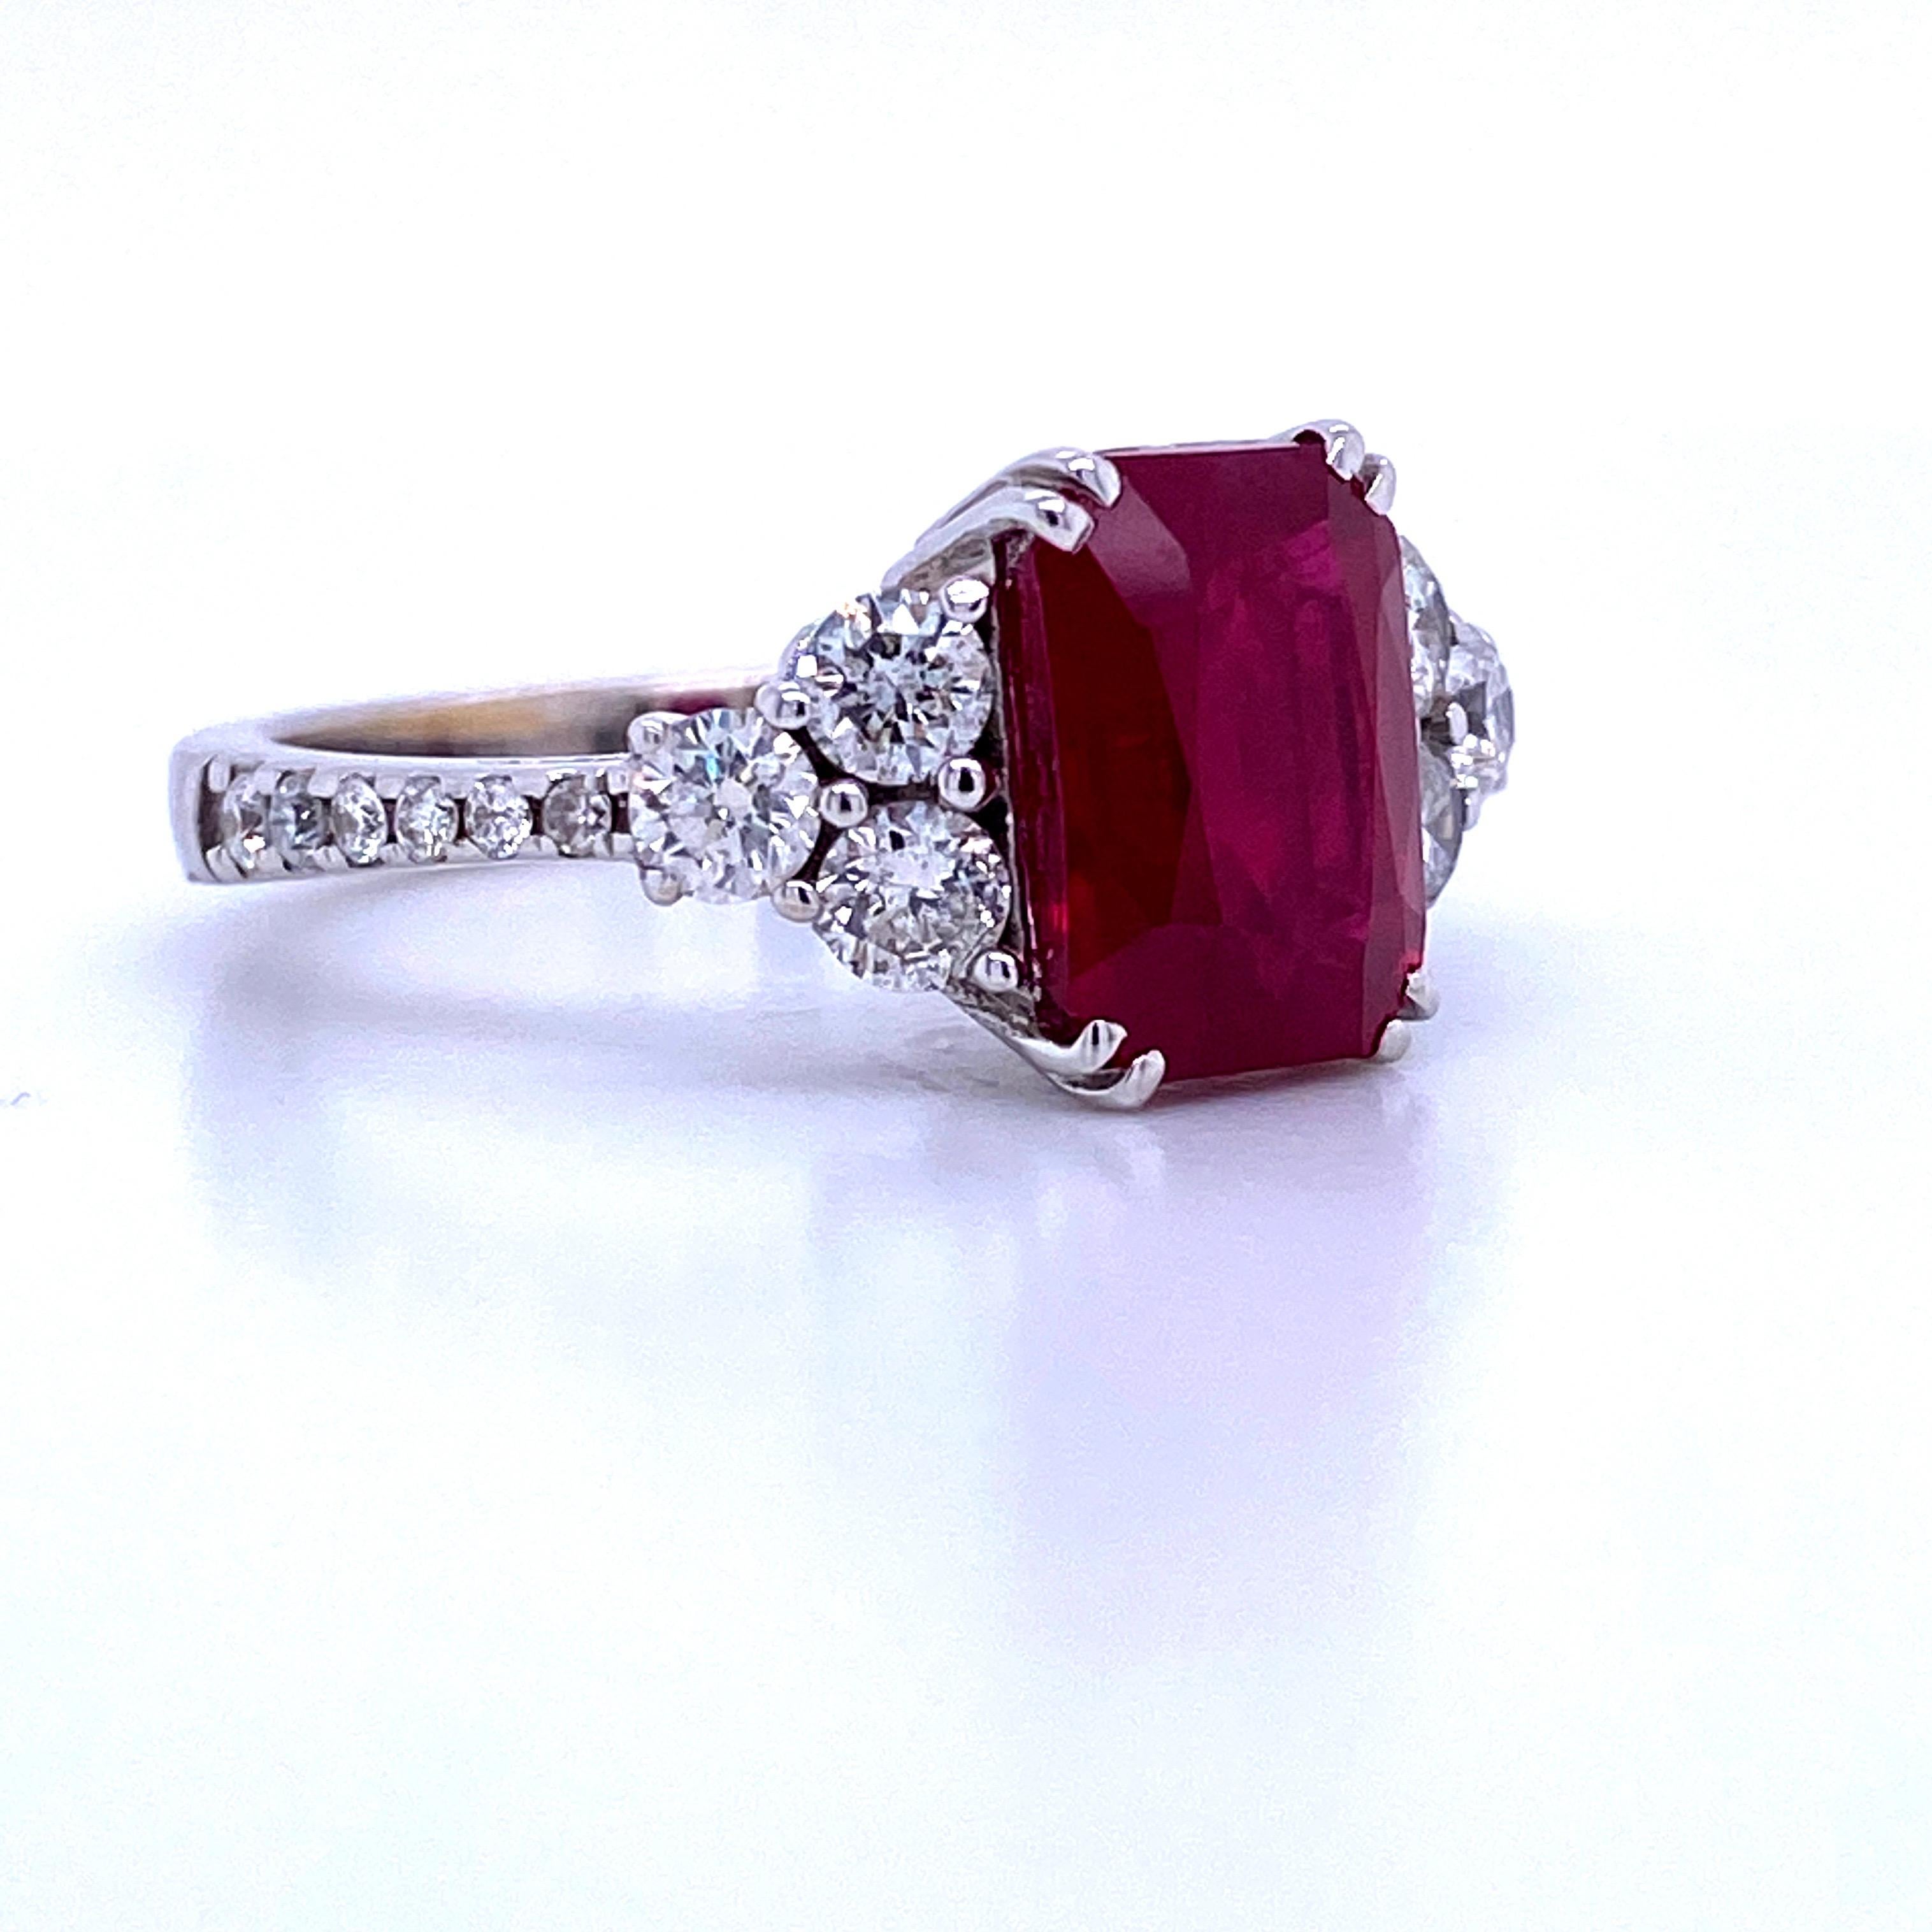 Contemporary Burma Ruby Diamond Ring 4.79 Carat AGL Certified 18 Karat White Gold